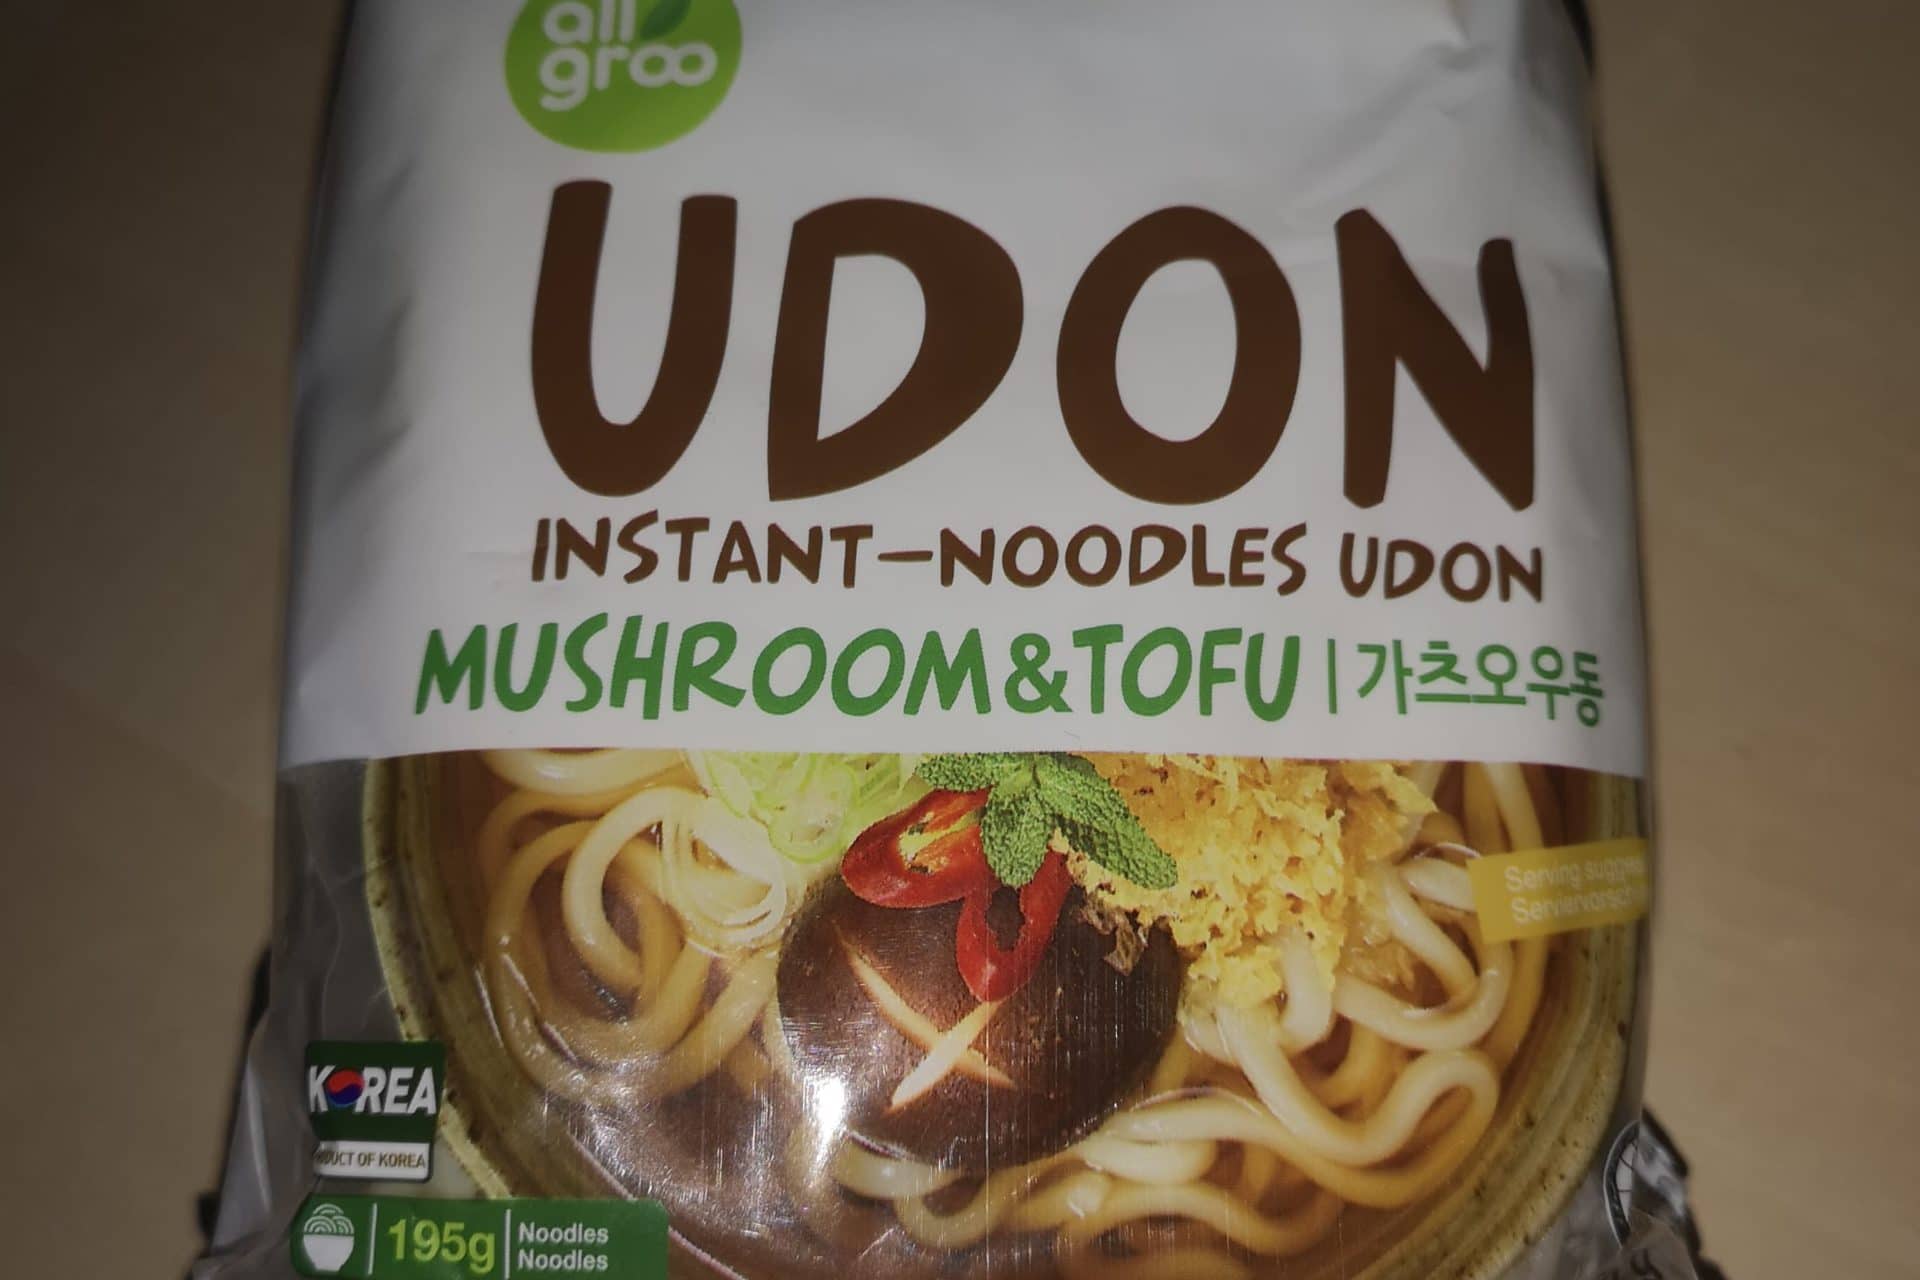 #1696: all groo "Udon Instant-Noodles Mushroom & Tofu" (Update 2021)